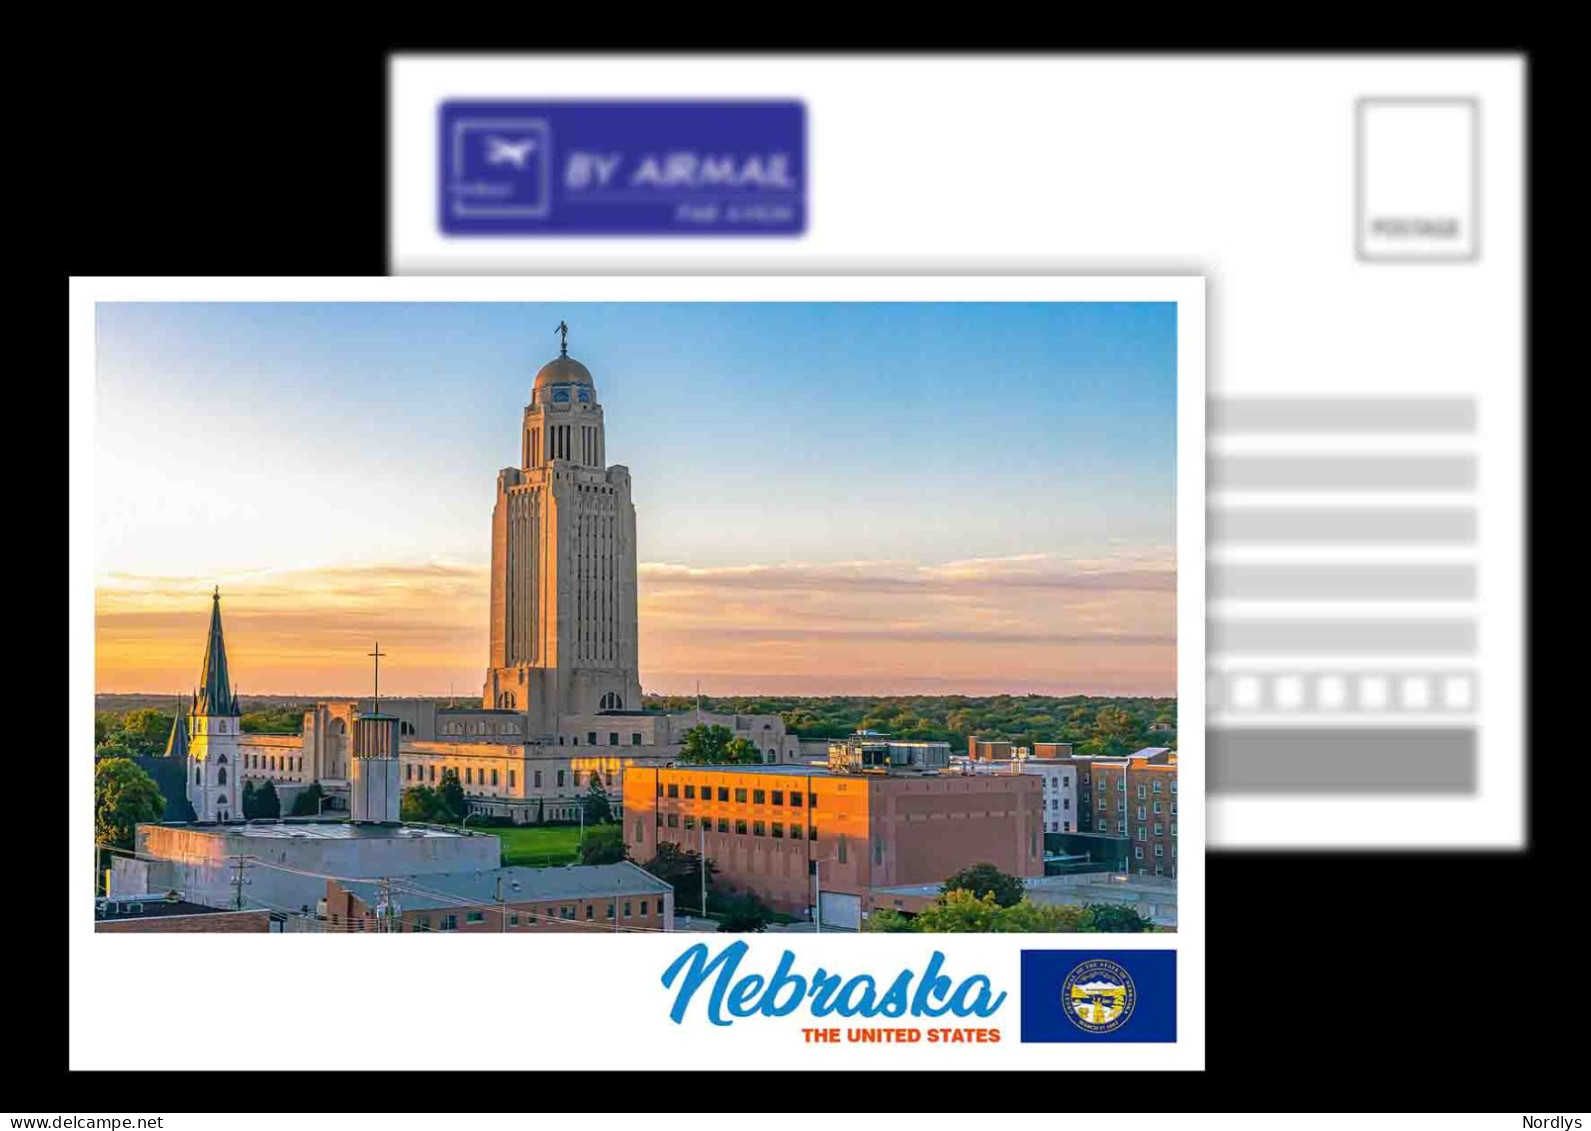 Nebraska / US States / View Card - Lincoln